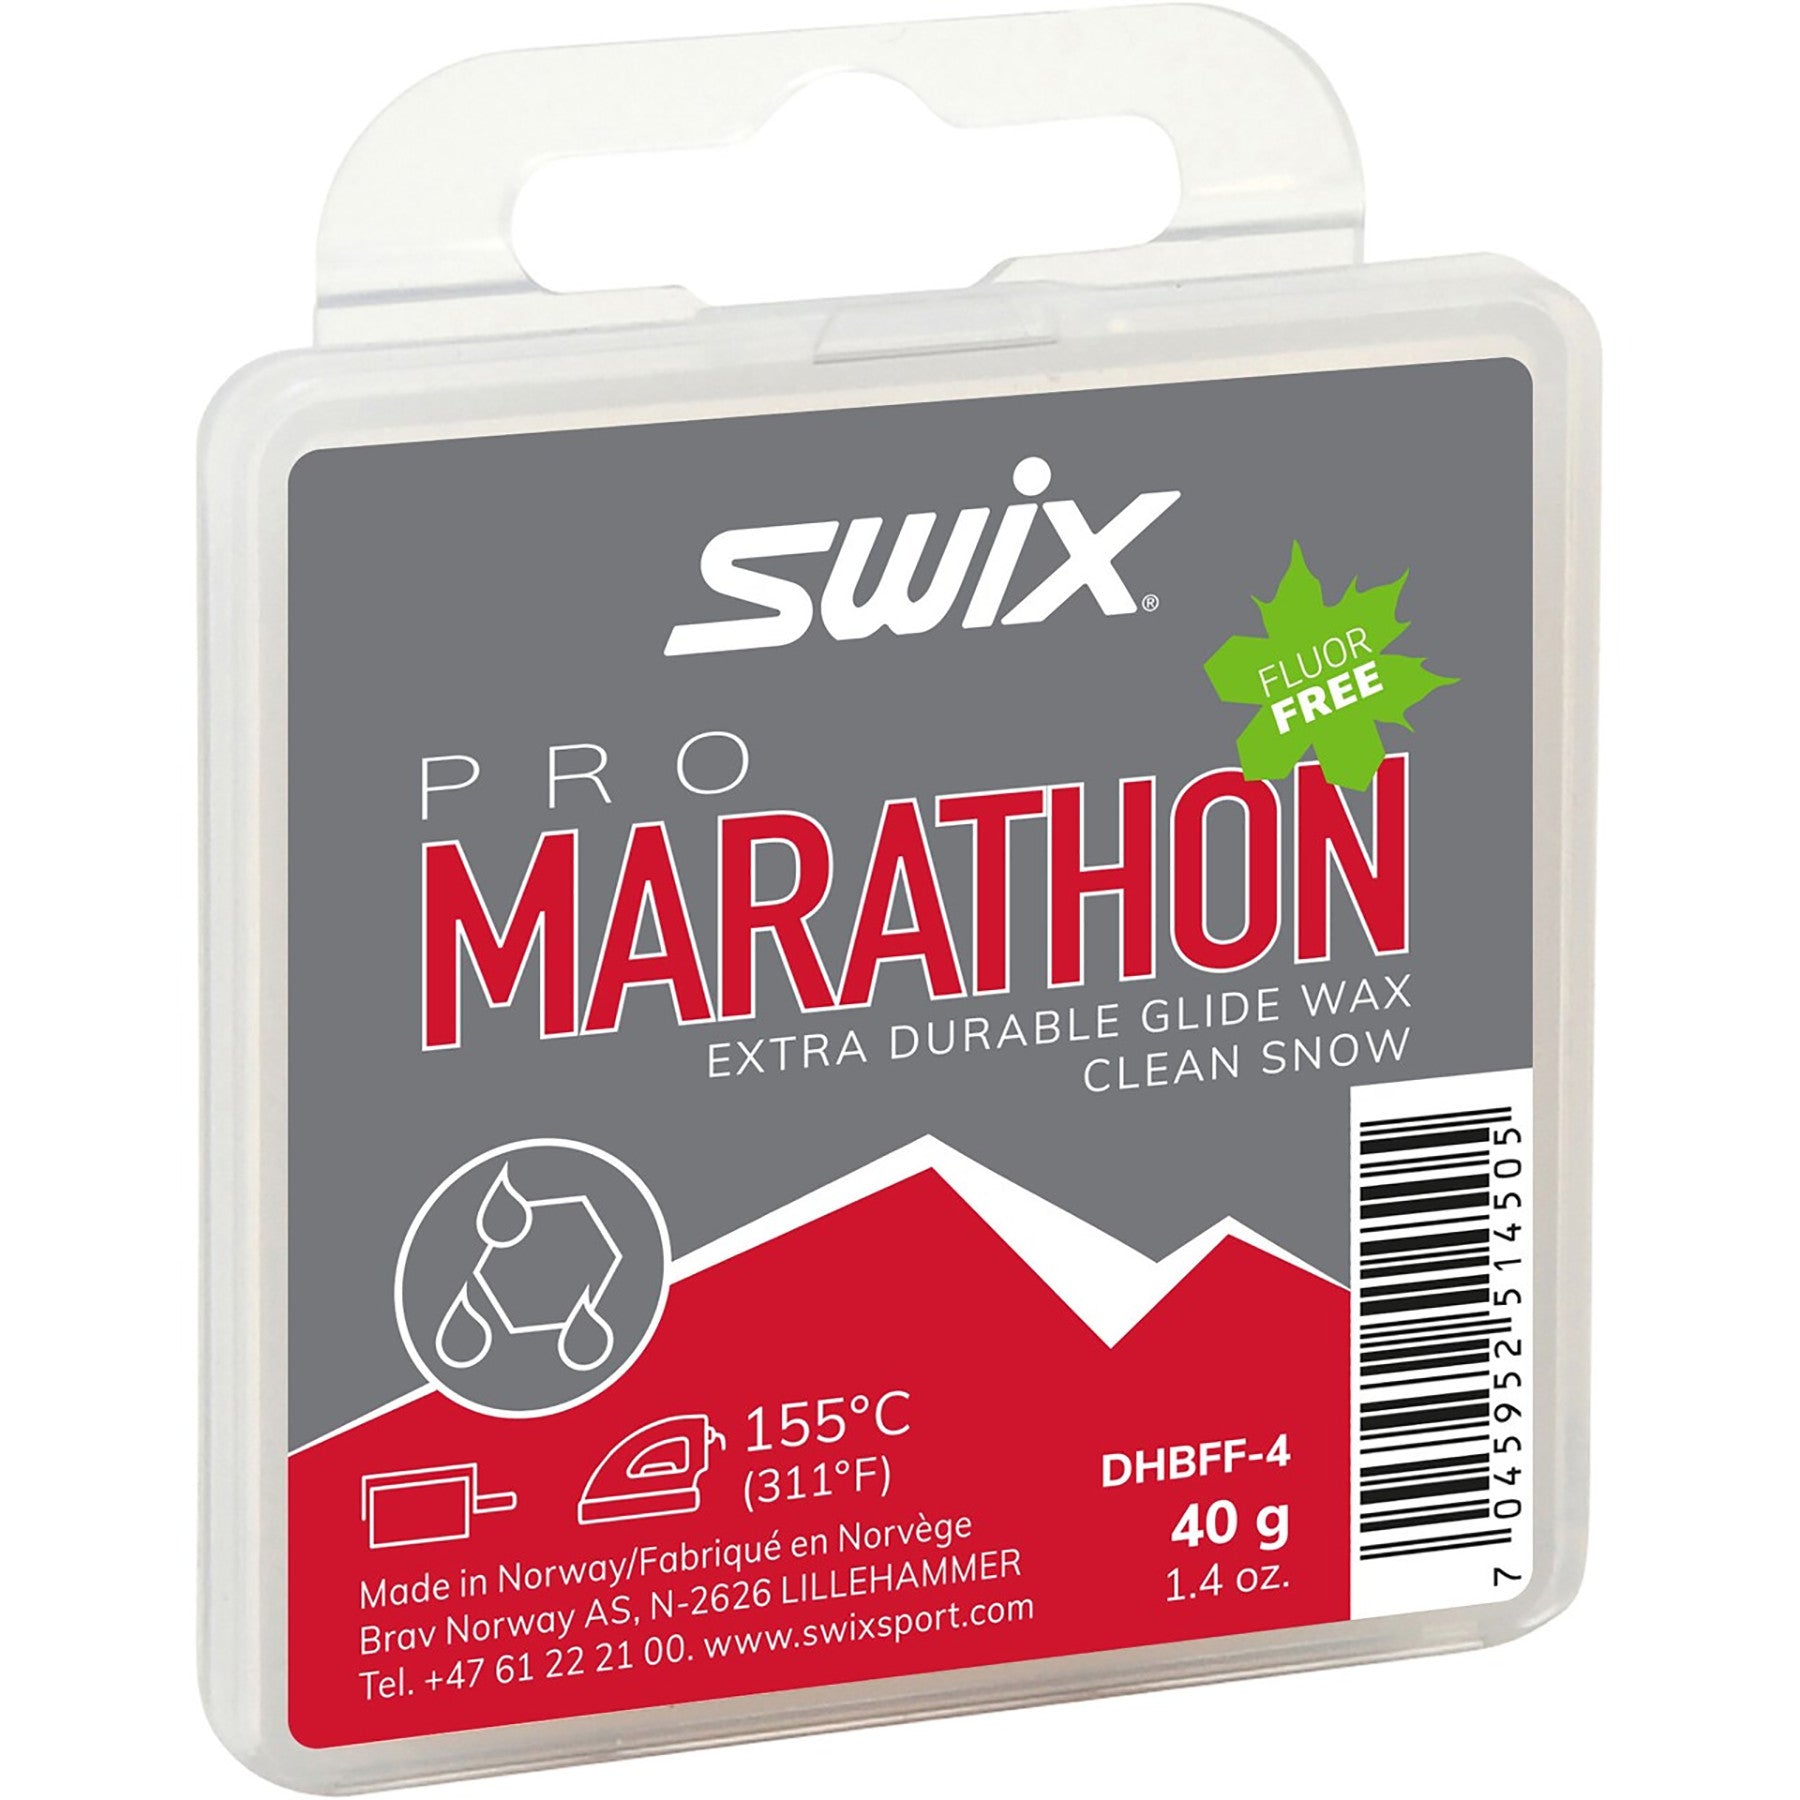 Swix Marathon Fluoro Free 40g - 0